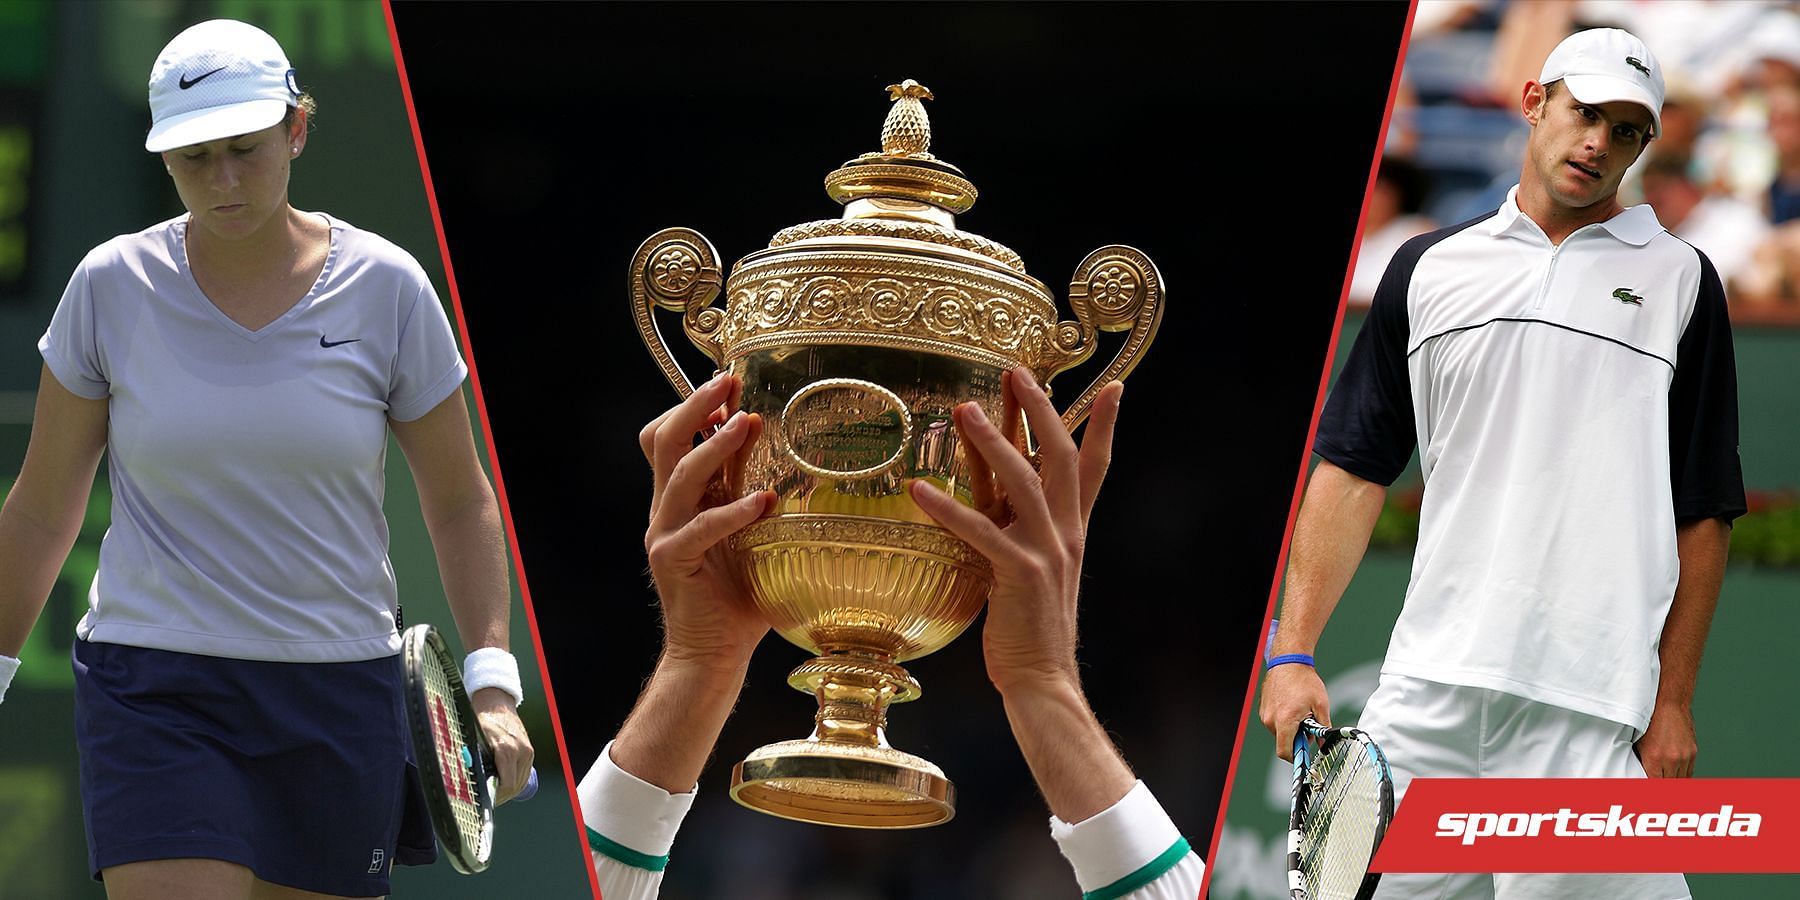 Monica Seles (L) and Andy Roddick (R) never won Wimbledon